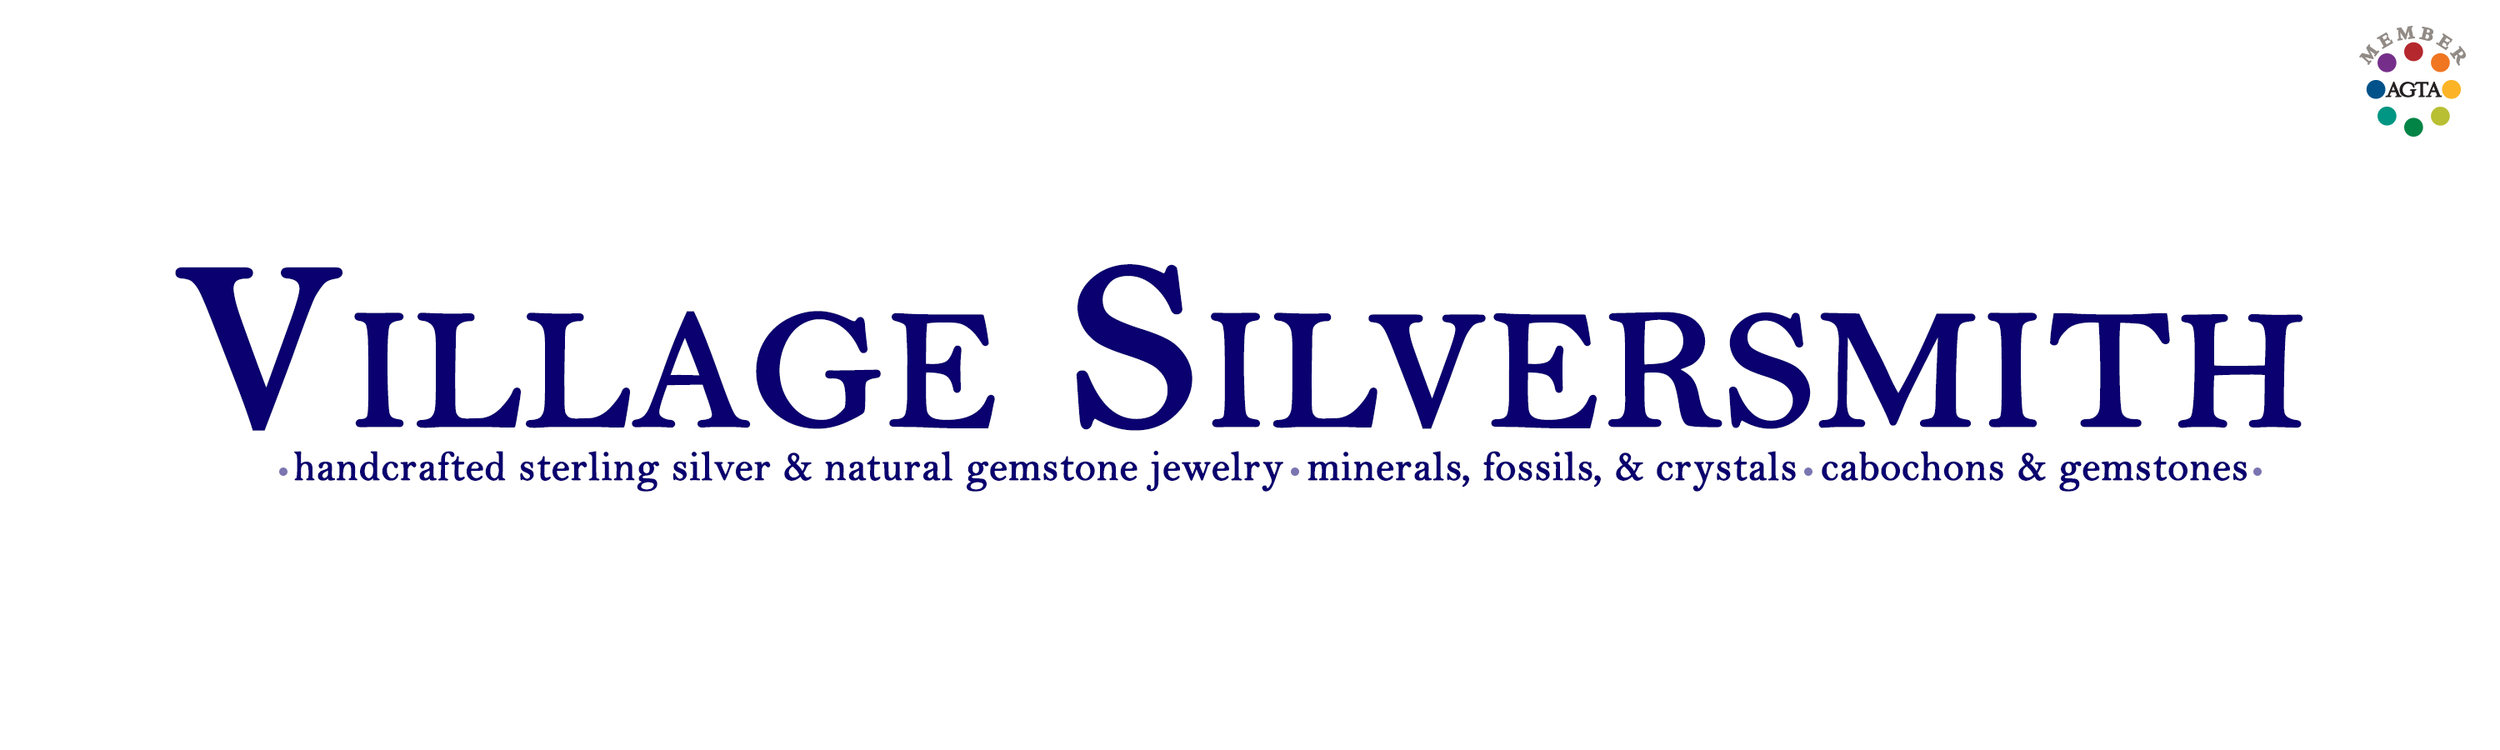 Lapis Lazuli Bracelet   Lapis Lazuli Jewelry  Lapis Jewelry  Sterling Silver  Village Silversmith